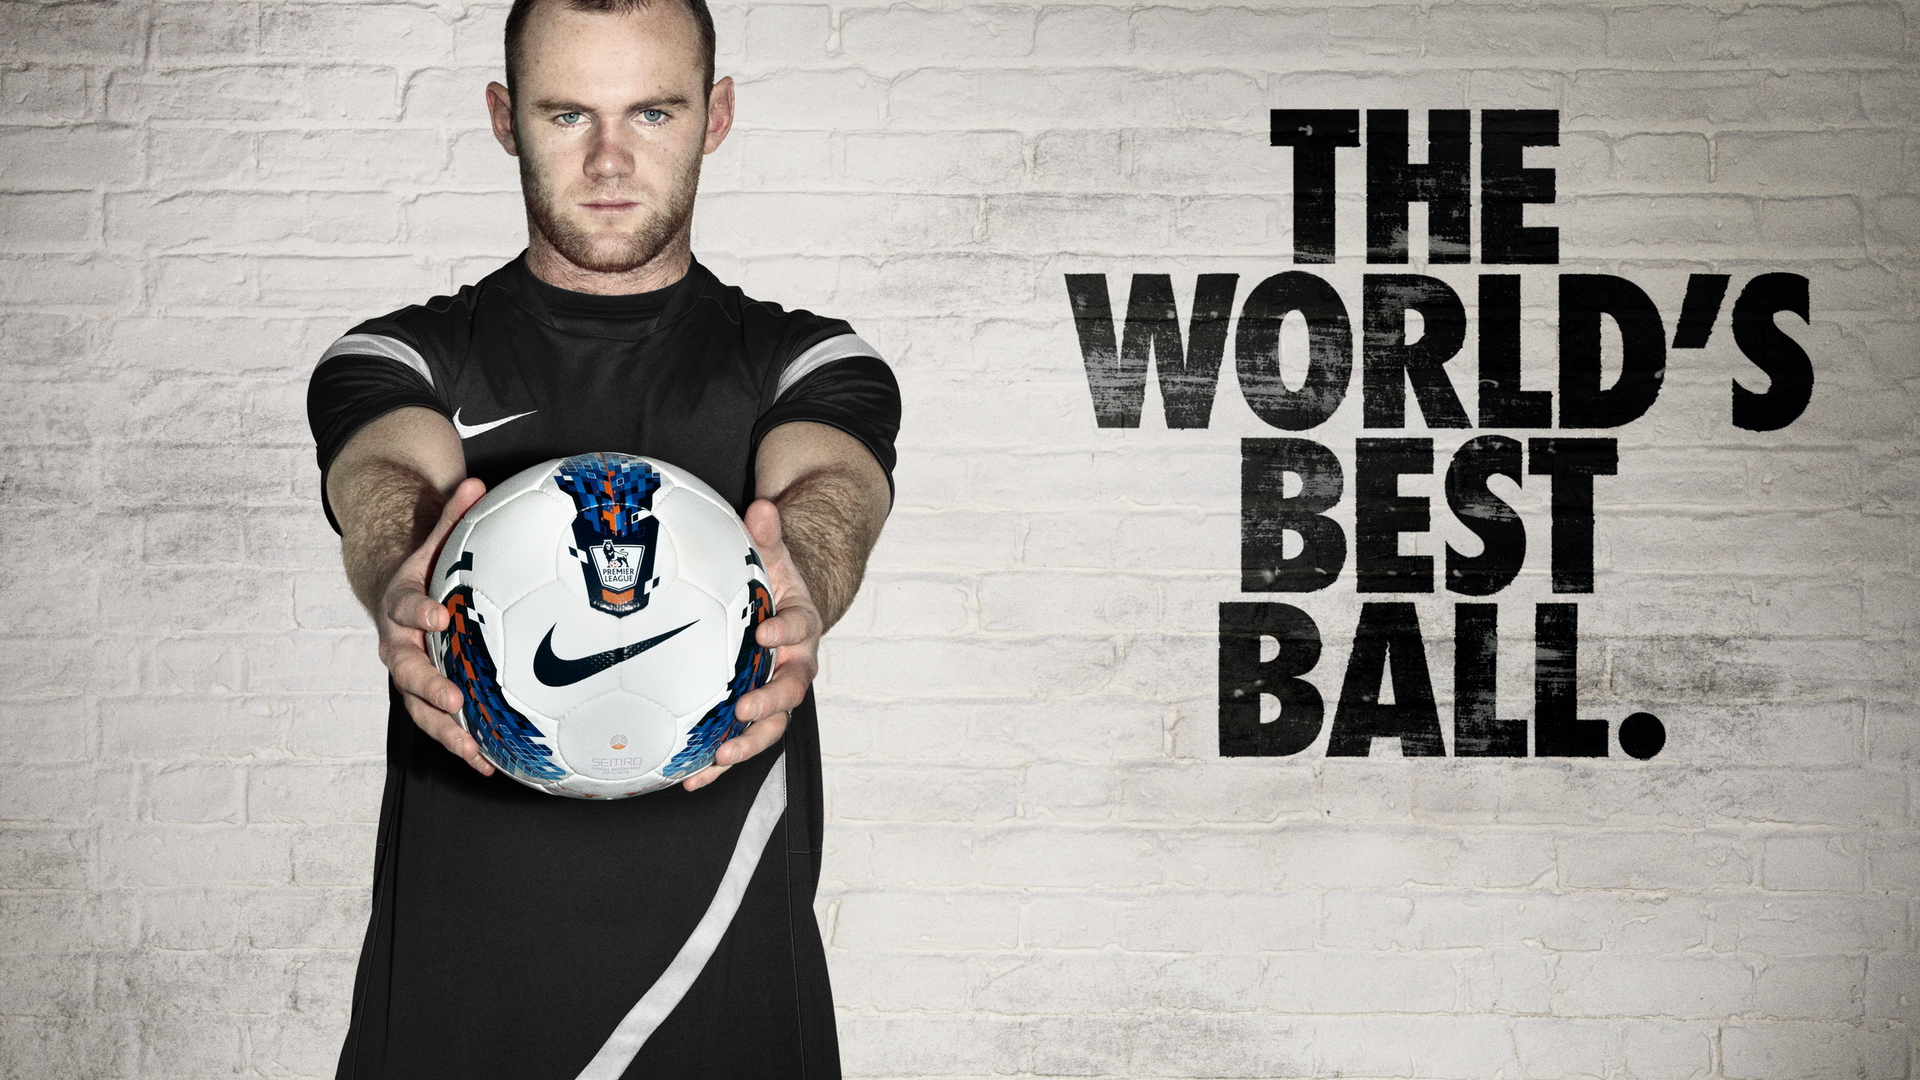 The world best ball. Nike